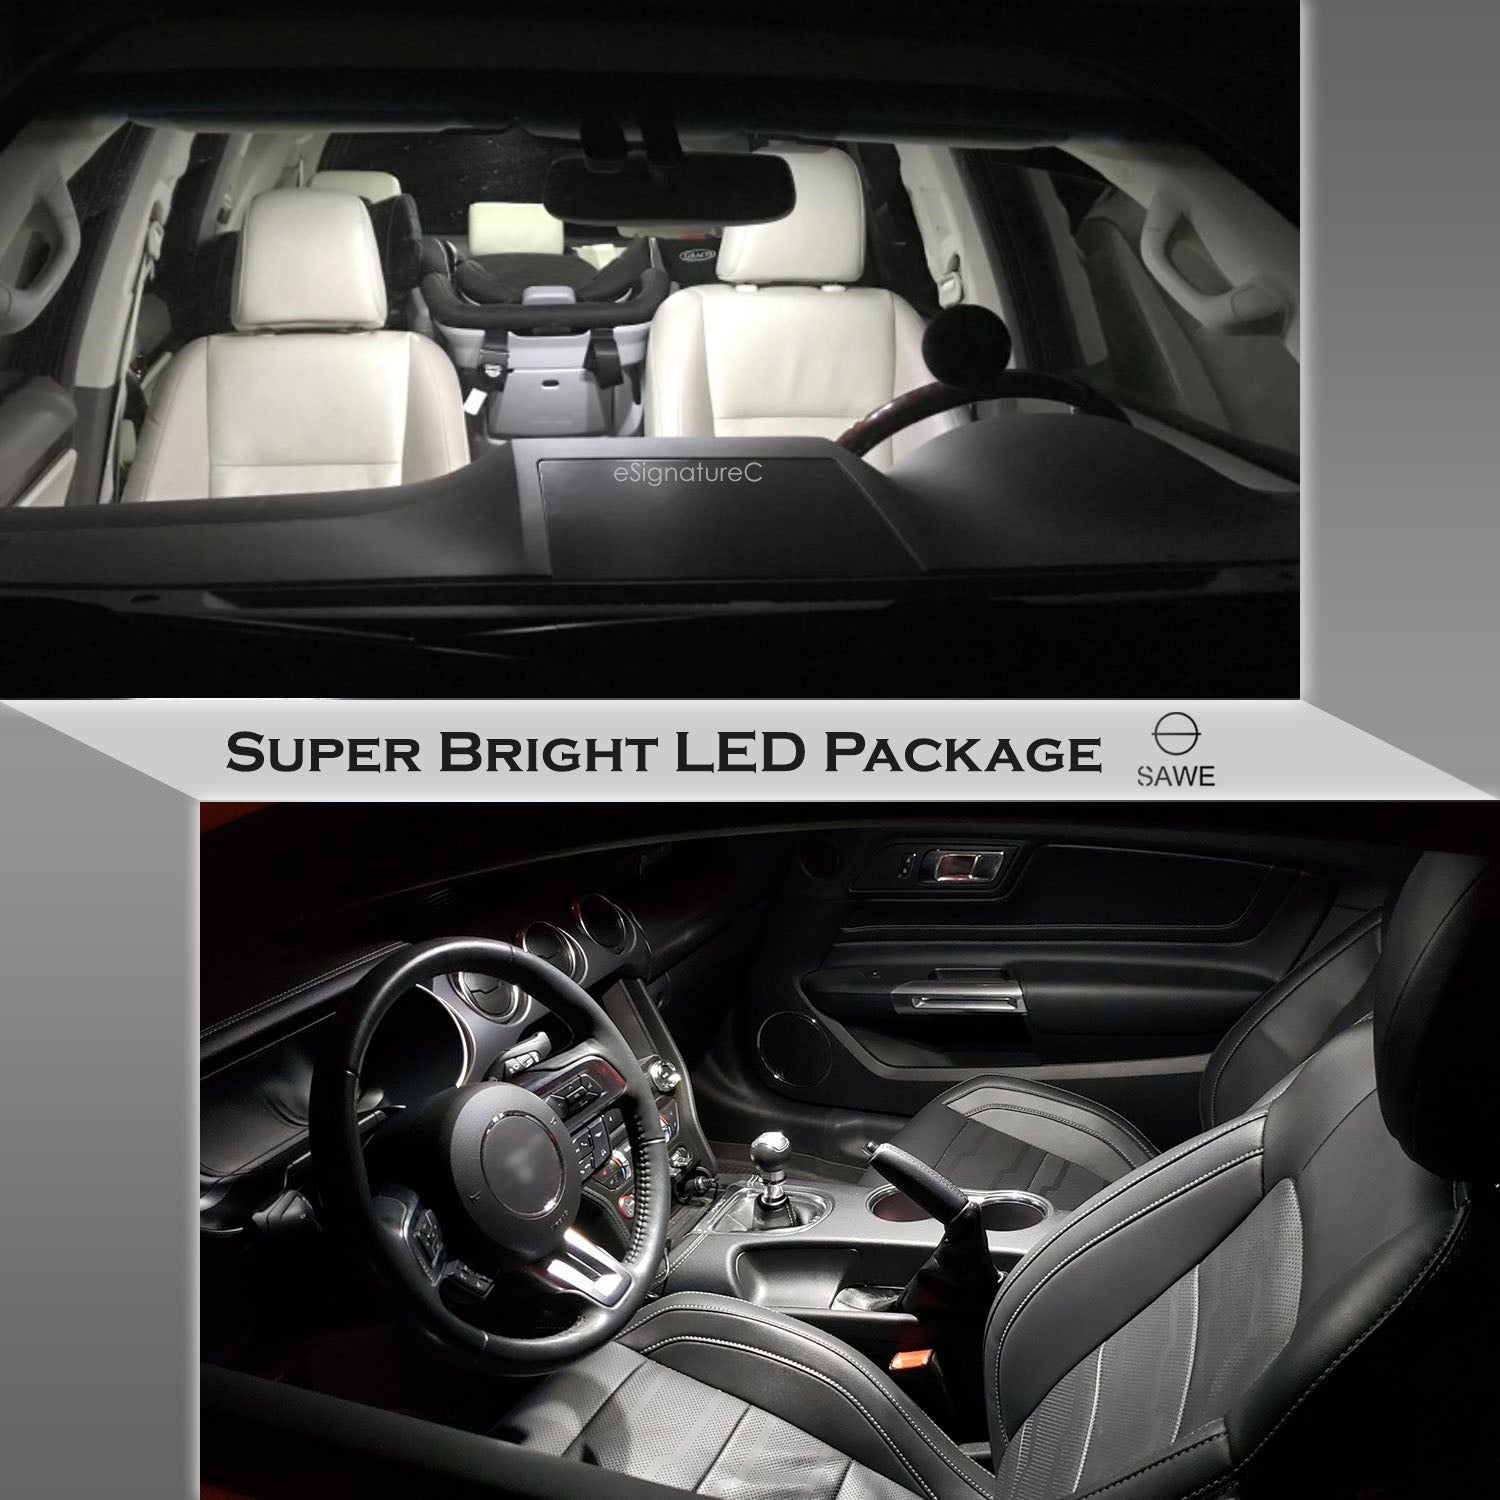 For Chevrolet Impala Interior LED Lights - Dome & Map Lights Package Kit for 2006 - 2013 - White